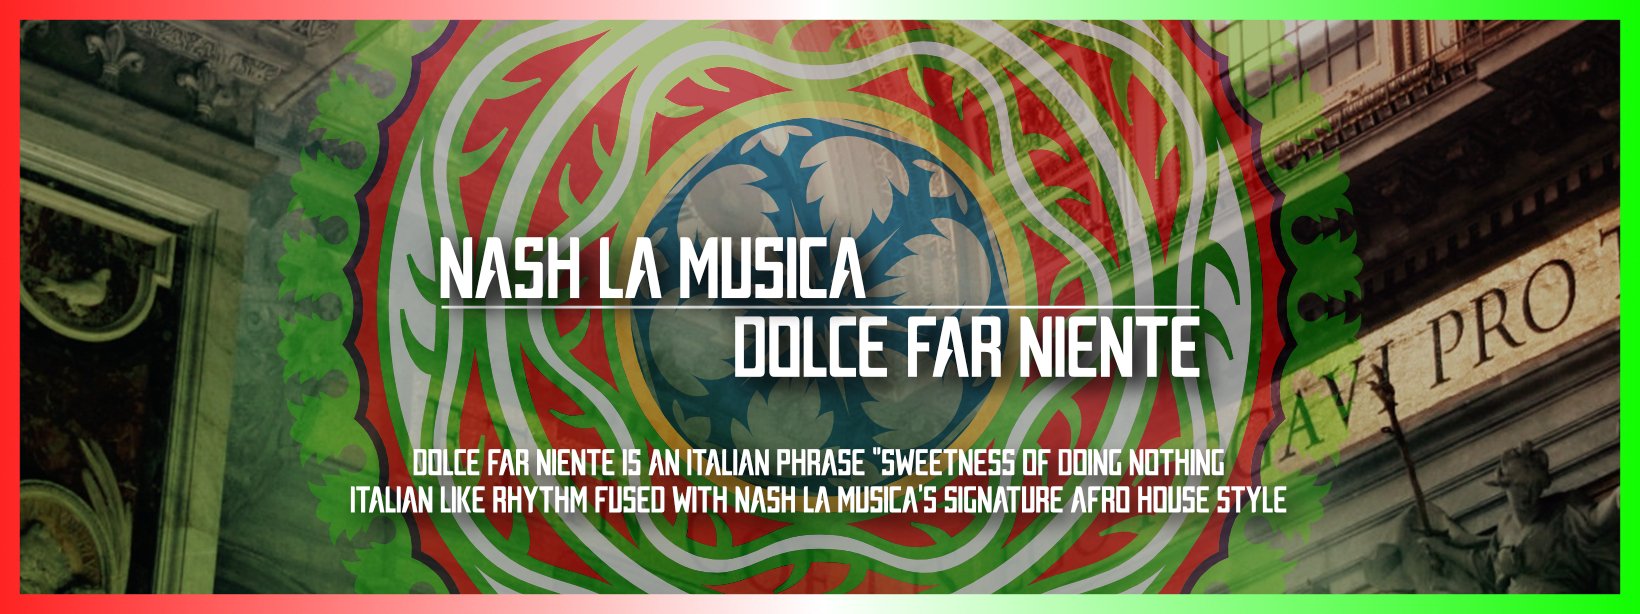 Nash La Musica - Dolce Far Neinte.jpg